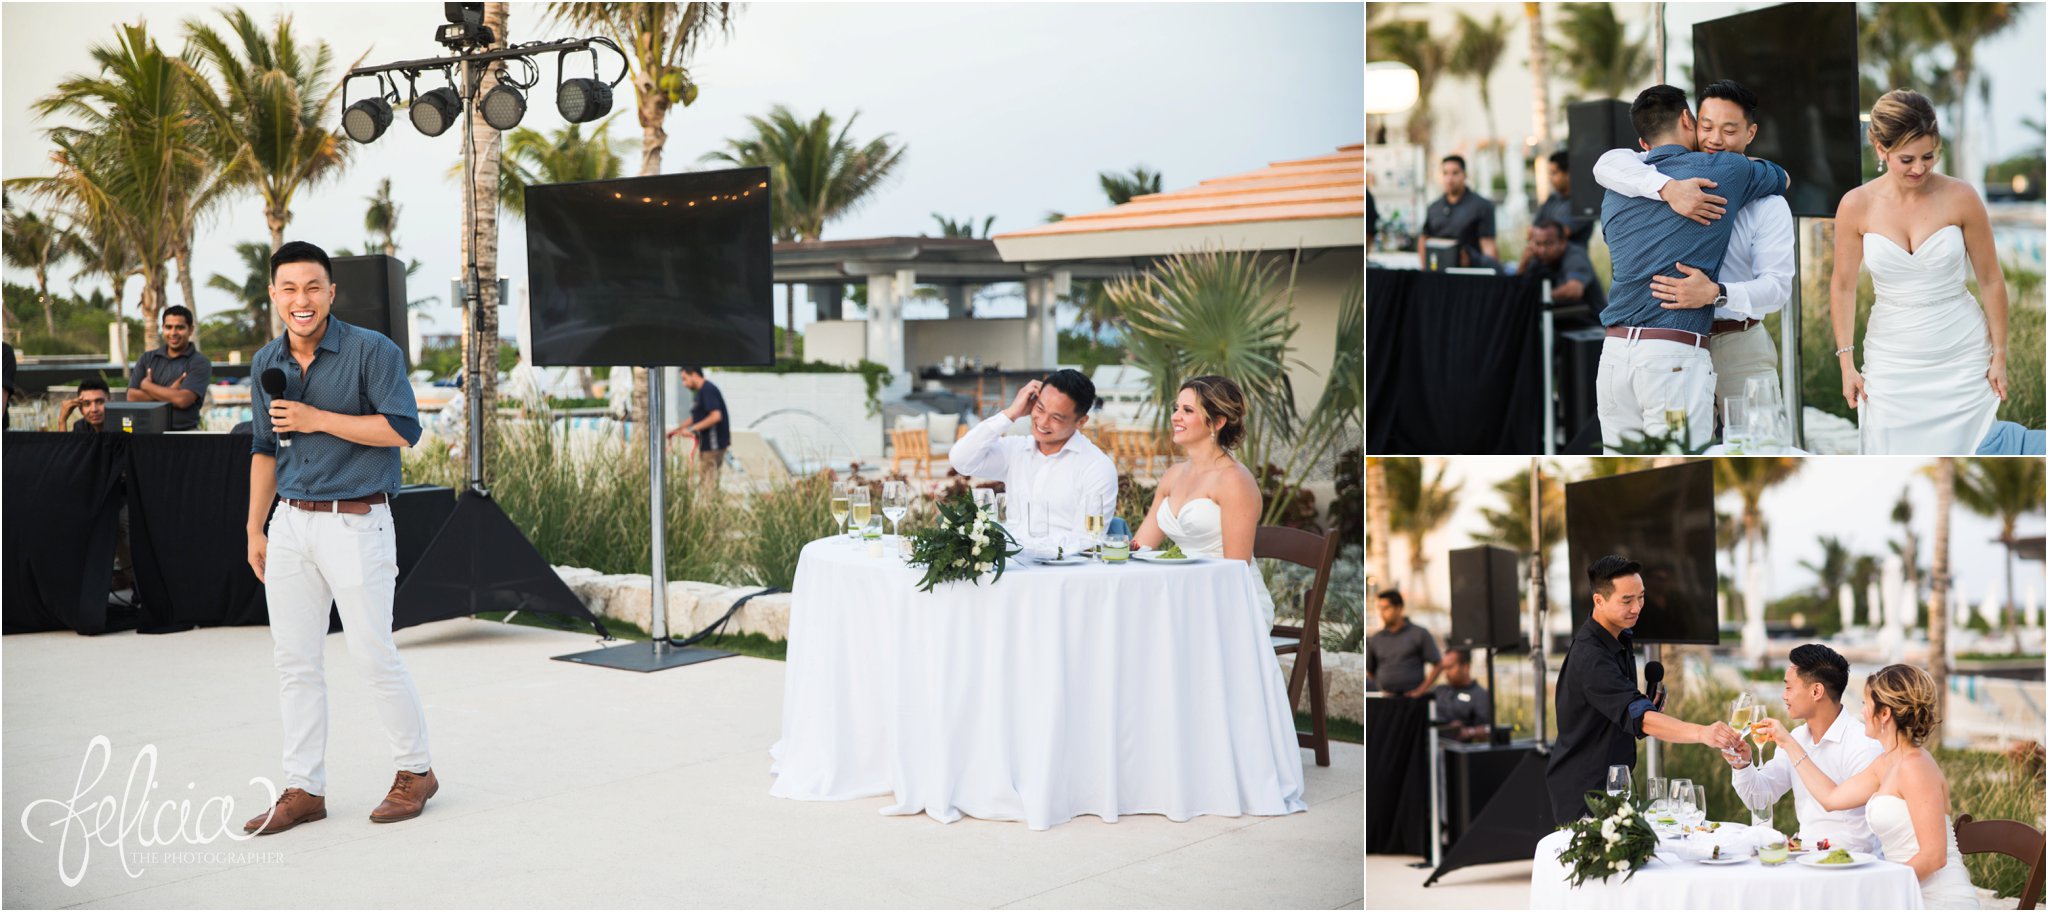 images by feliciathephotographer.com | Destination Beach Wedding | Unicco 20 87 | Photographer | L&S Travel | reception | toasts | speech | best man | golden hour | bride | groom | head table | palm trees | ocean | hug | sentimental | 